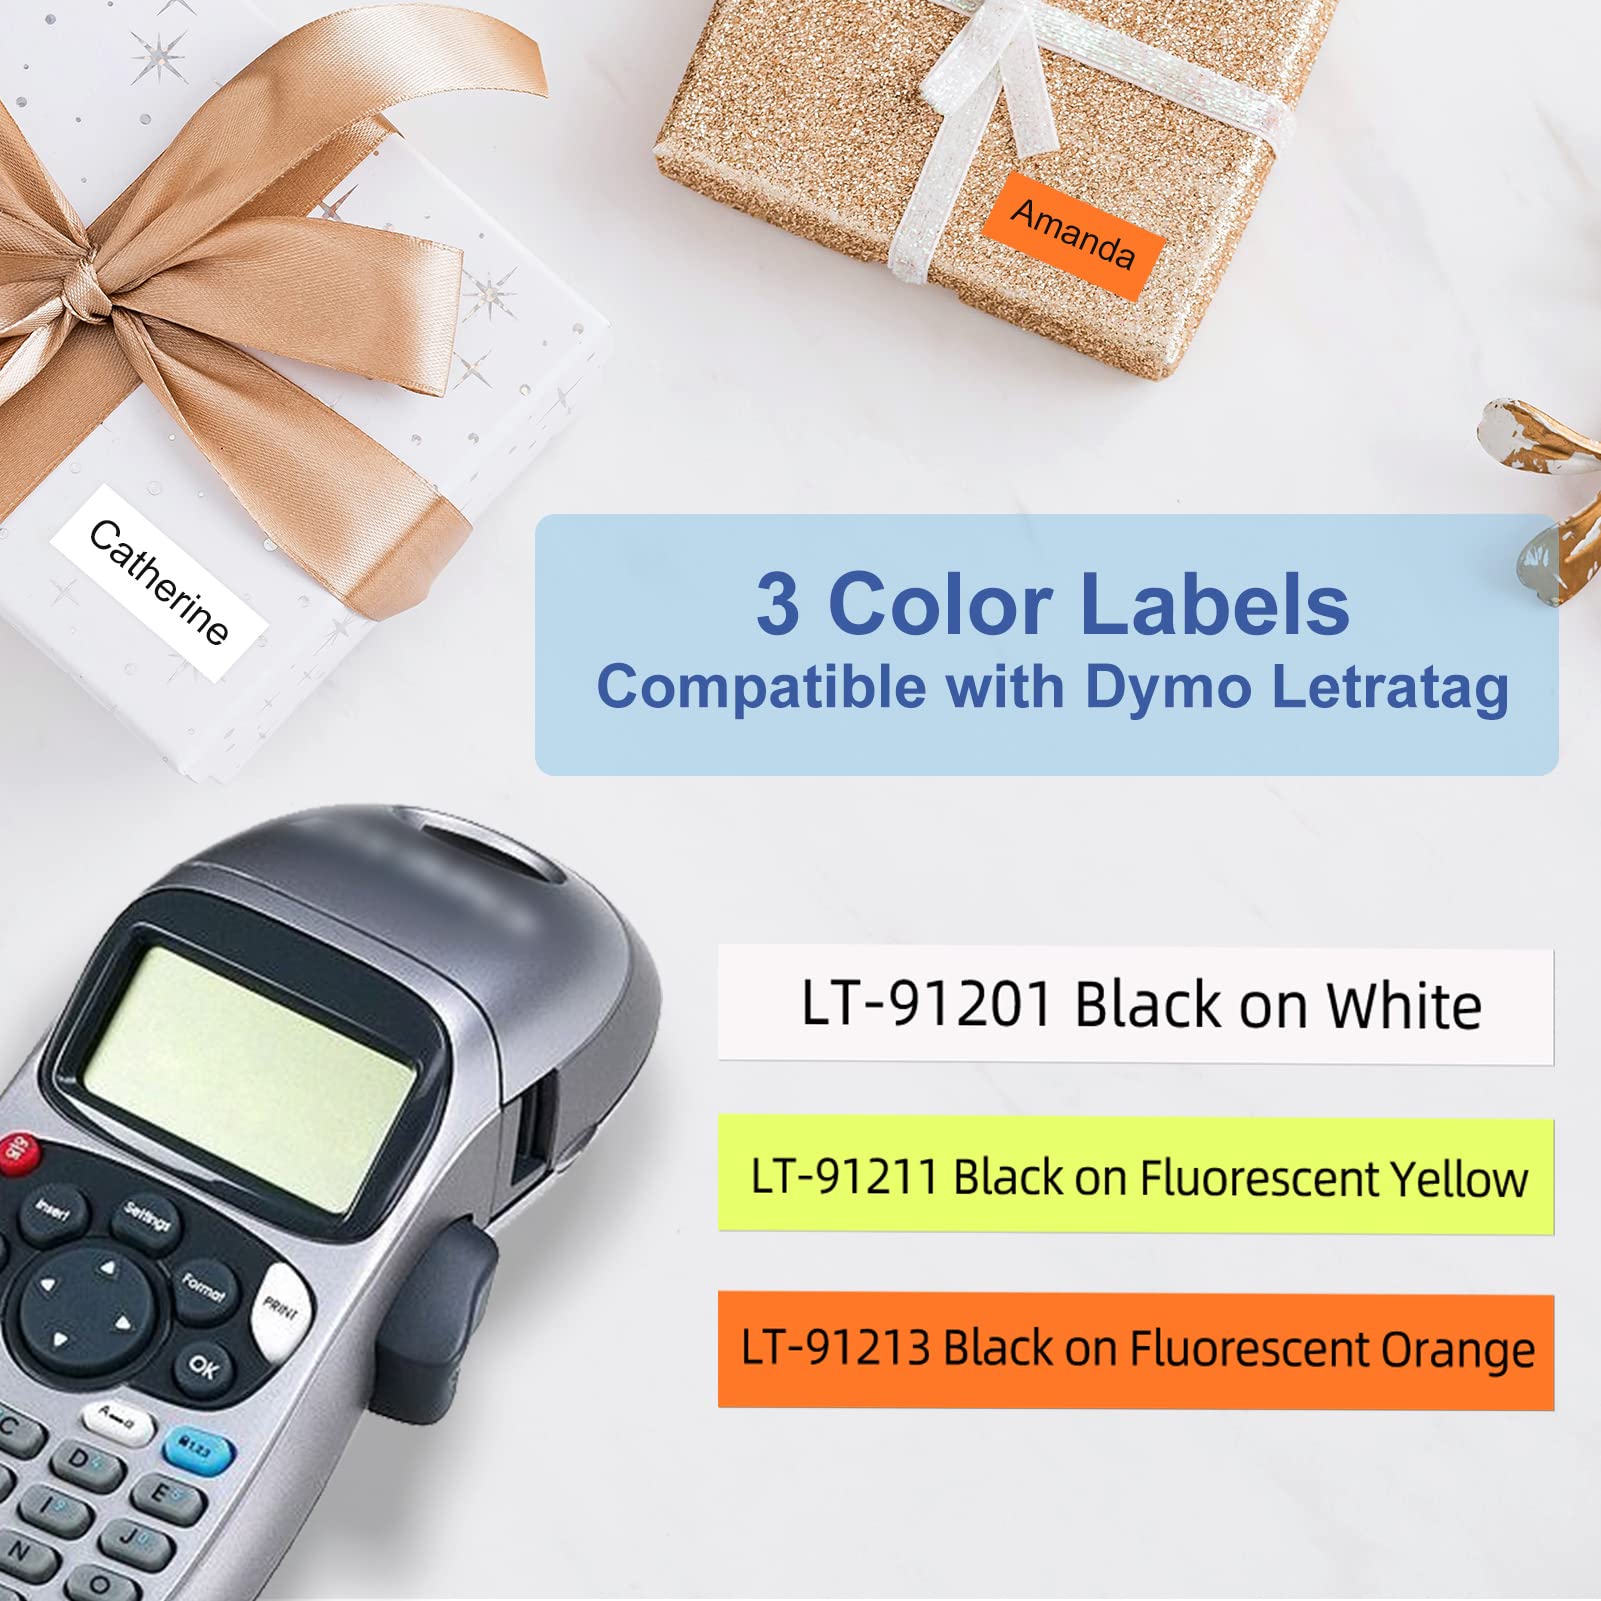 3 X Fluorescent Labels Compatible with Dymo Letratag Refills Replacement for Dymo Letratag LT-100T LT-100H LT-110T QX50 Label Maker